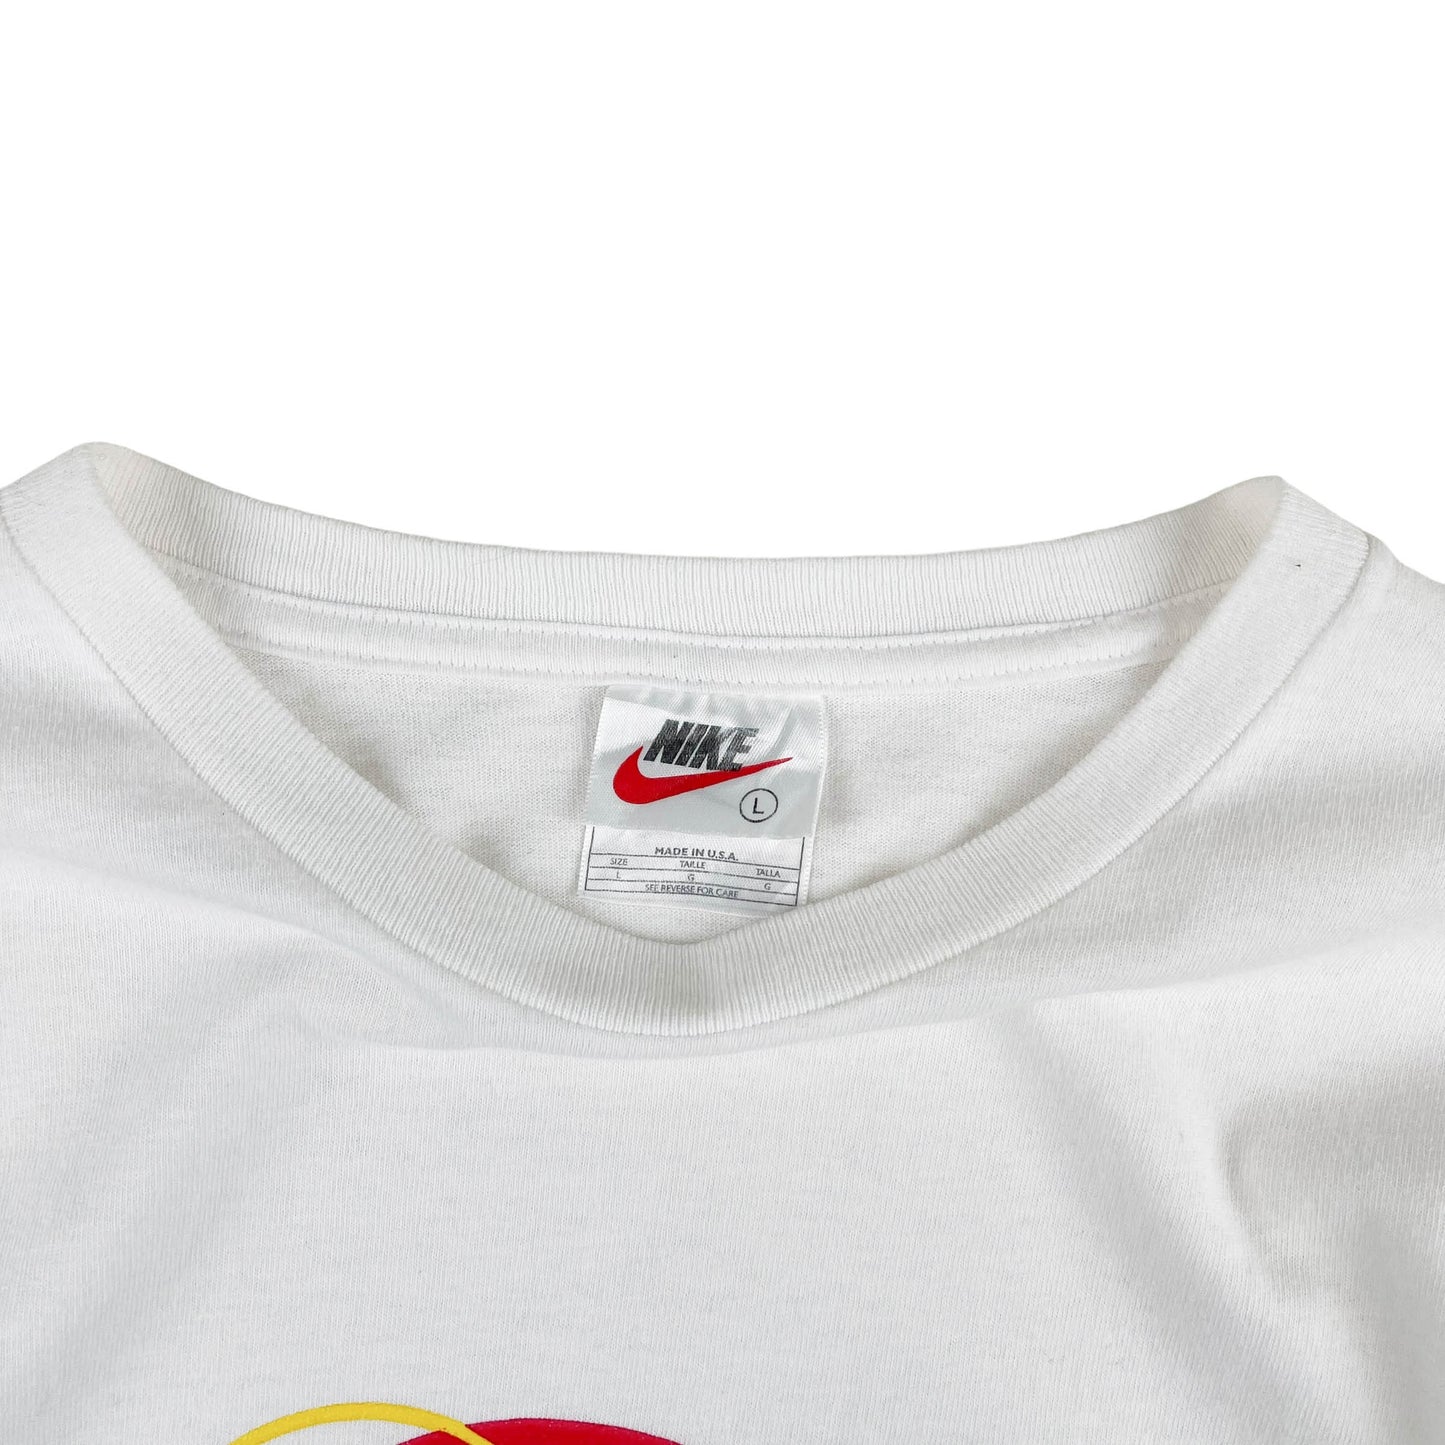 Vintage Nike Graphic T shirt (L)